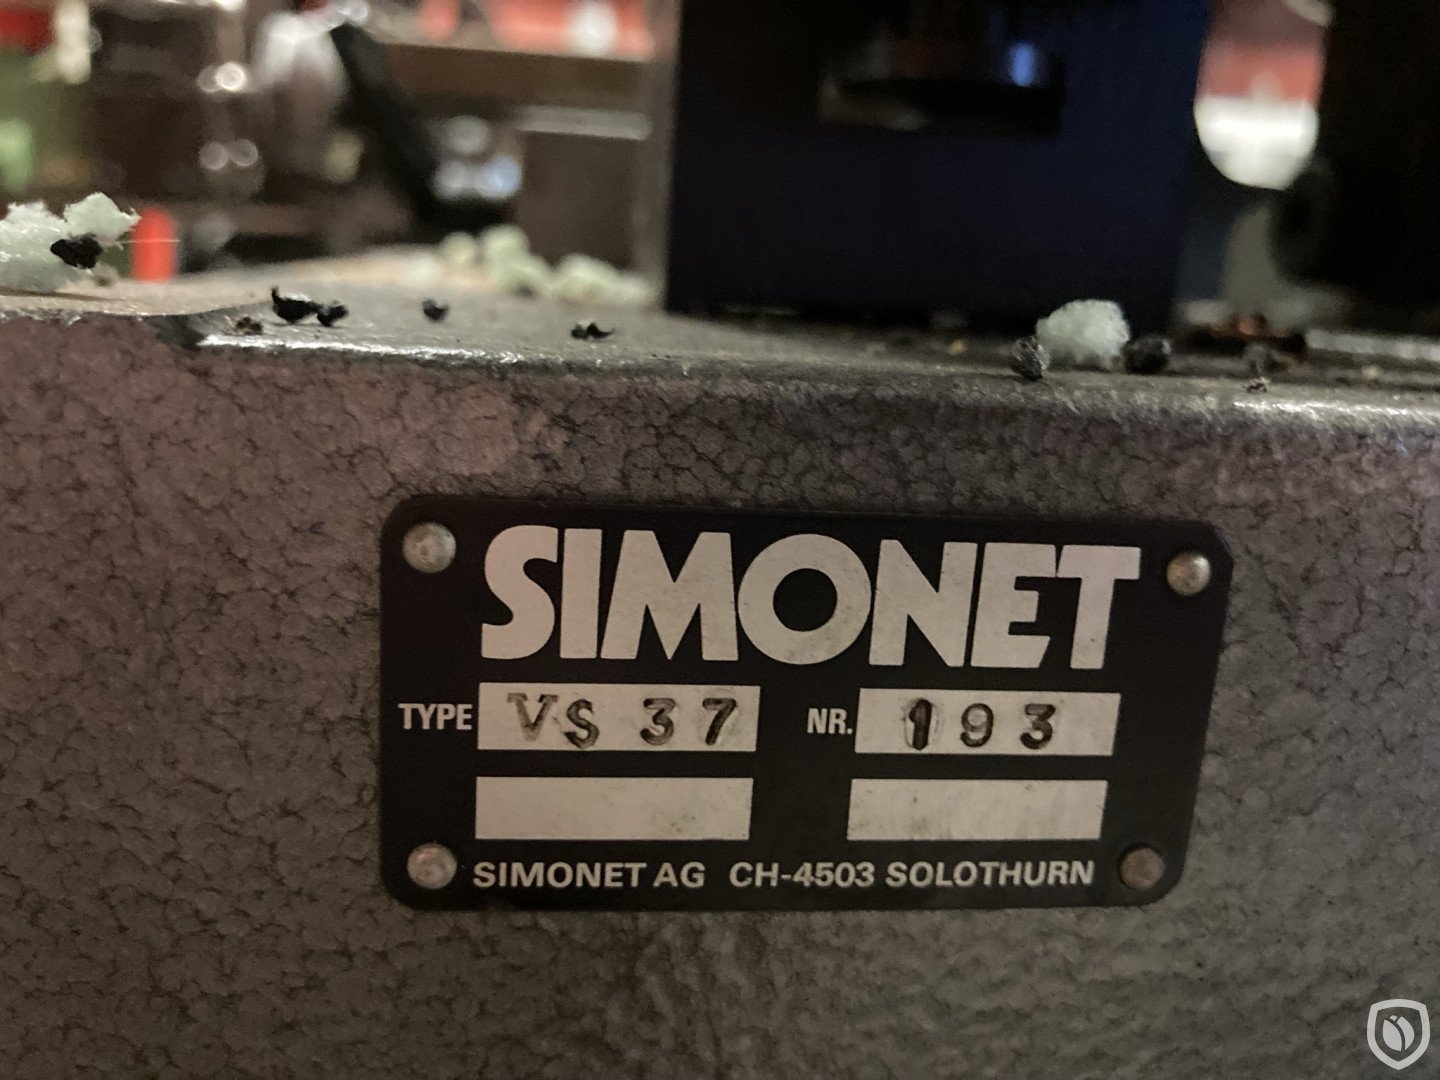 SIMONET VS 37